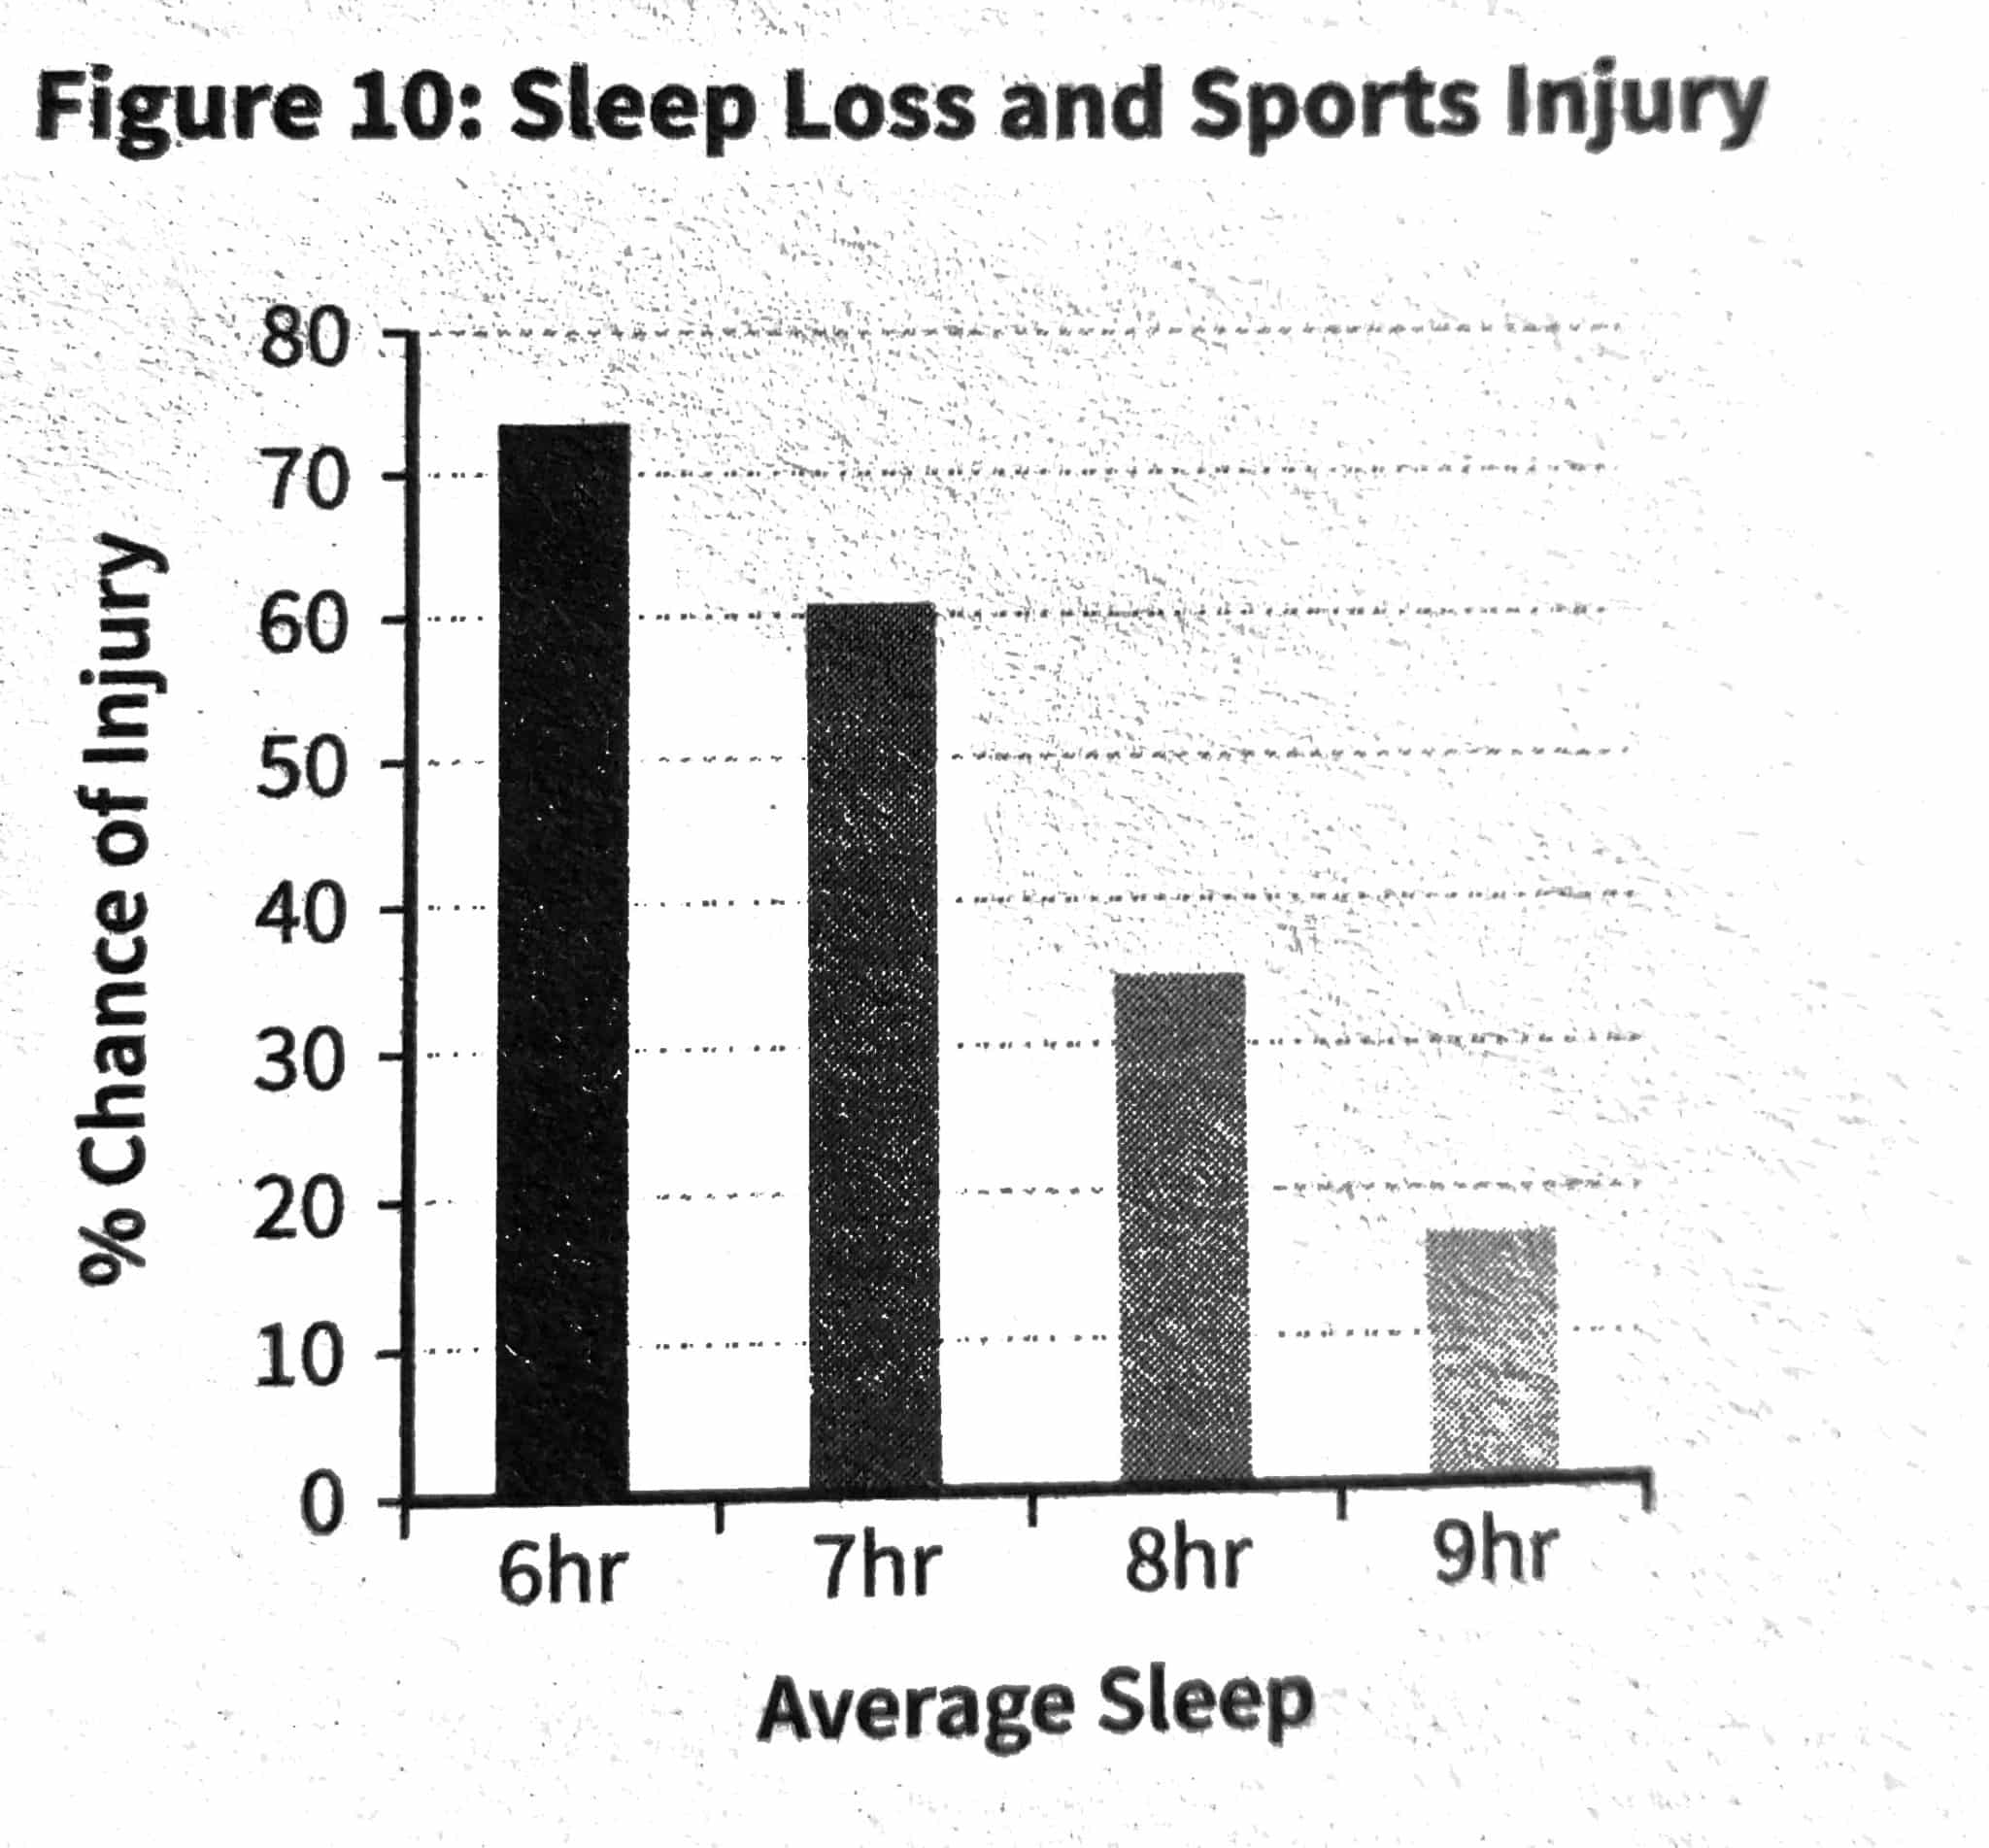 sommeil et blessure sportive